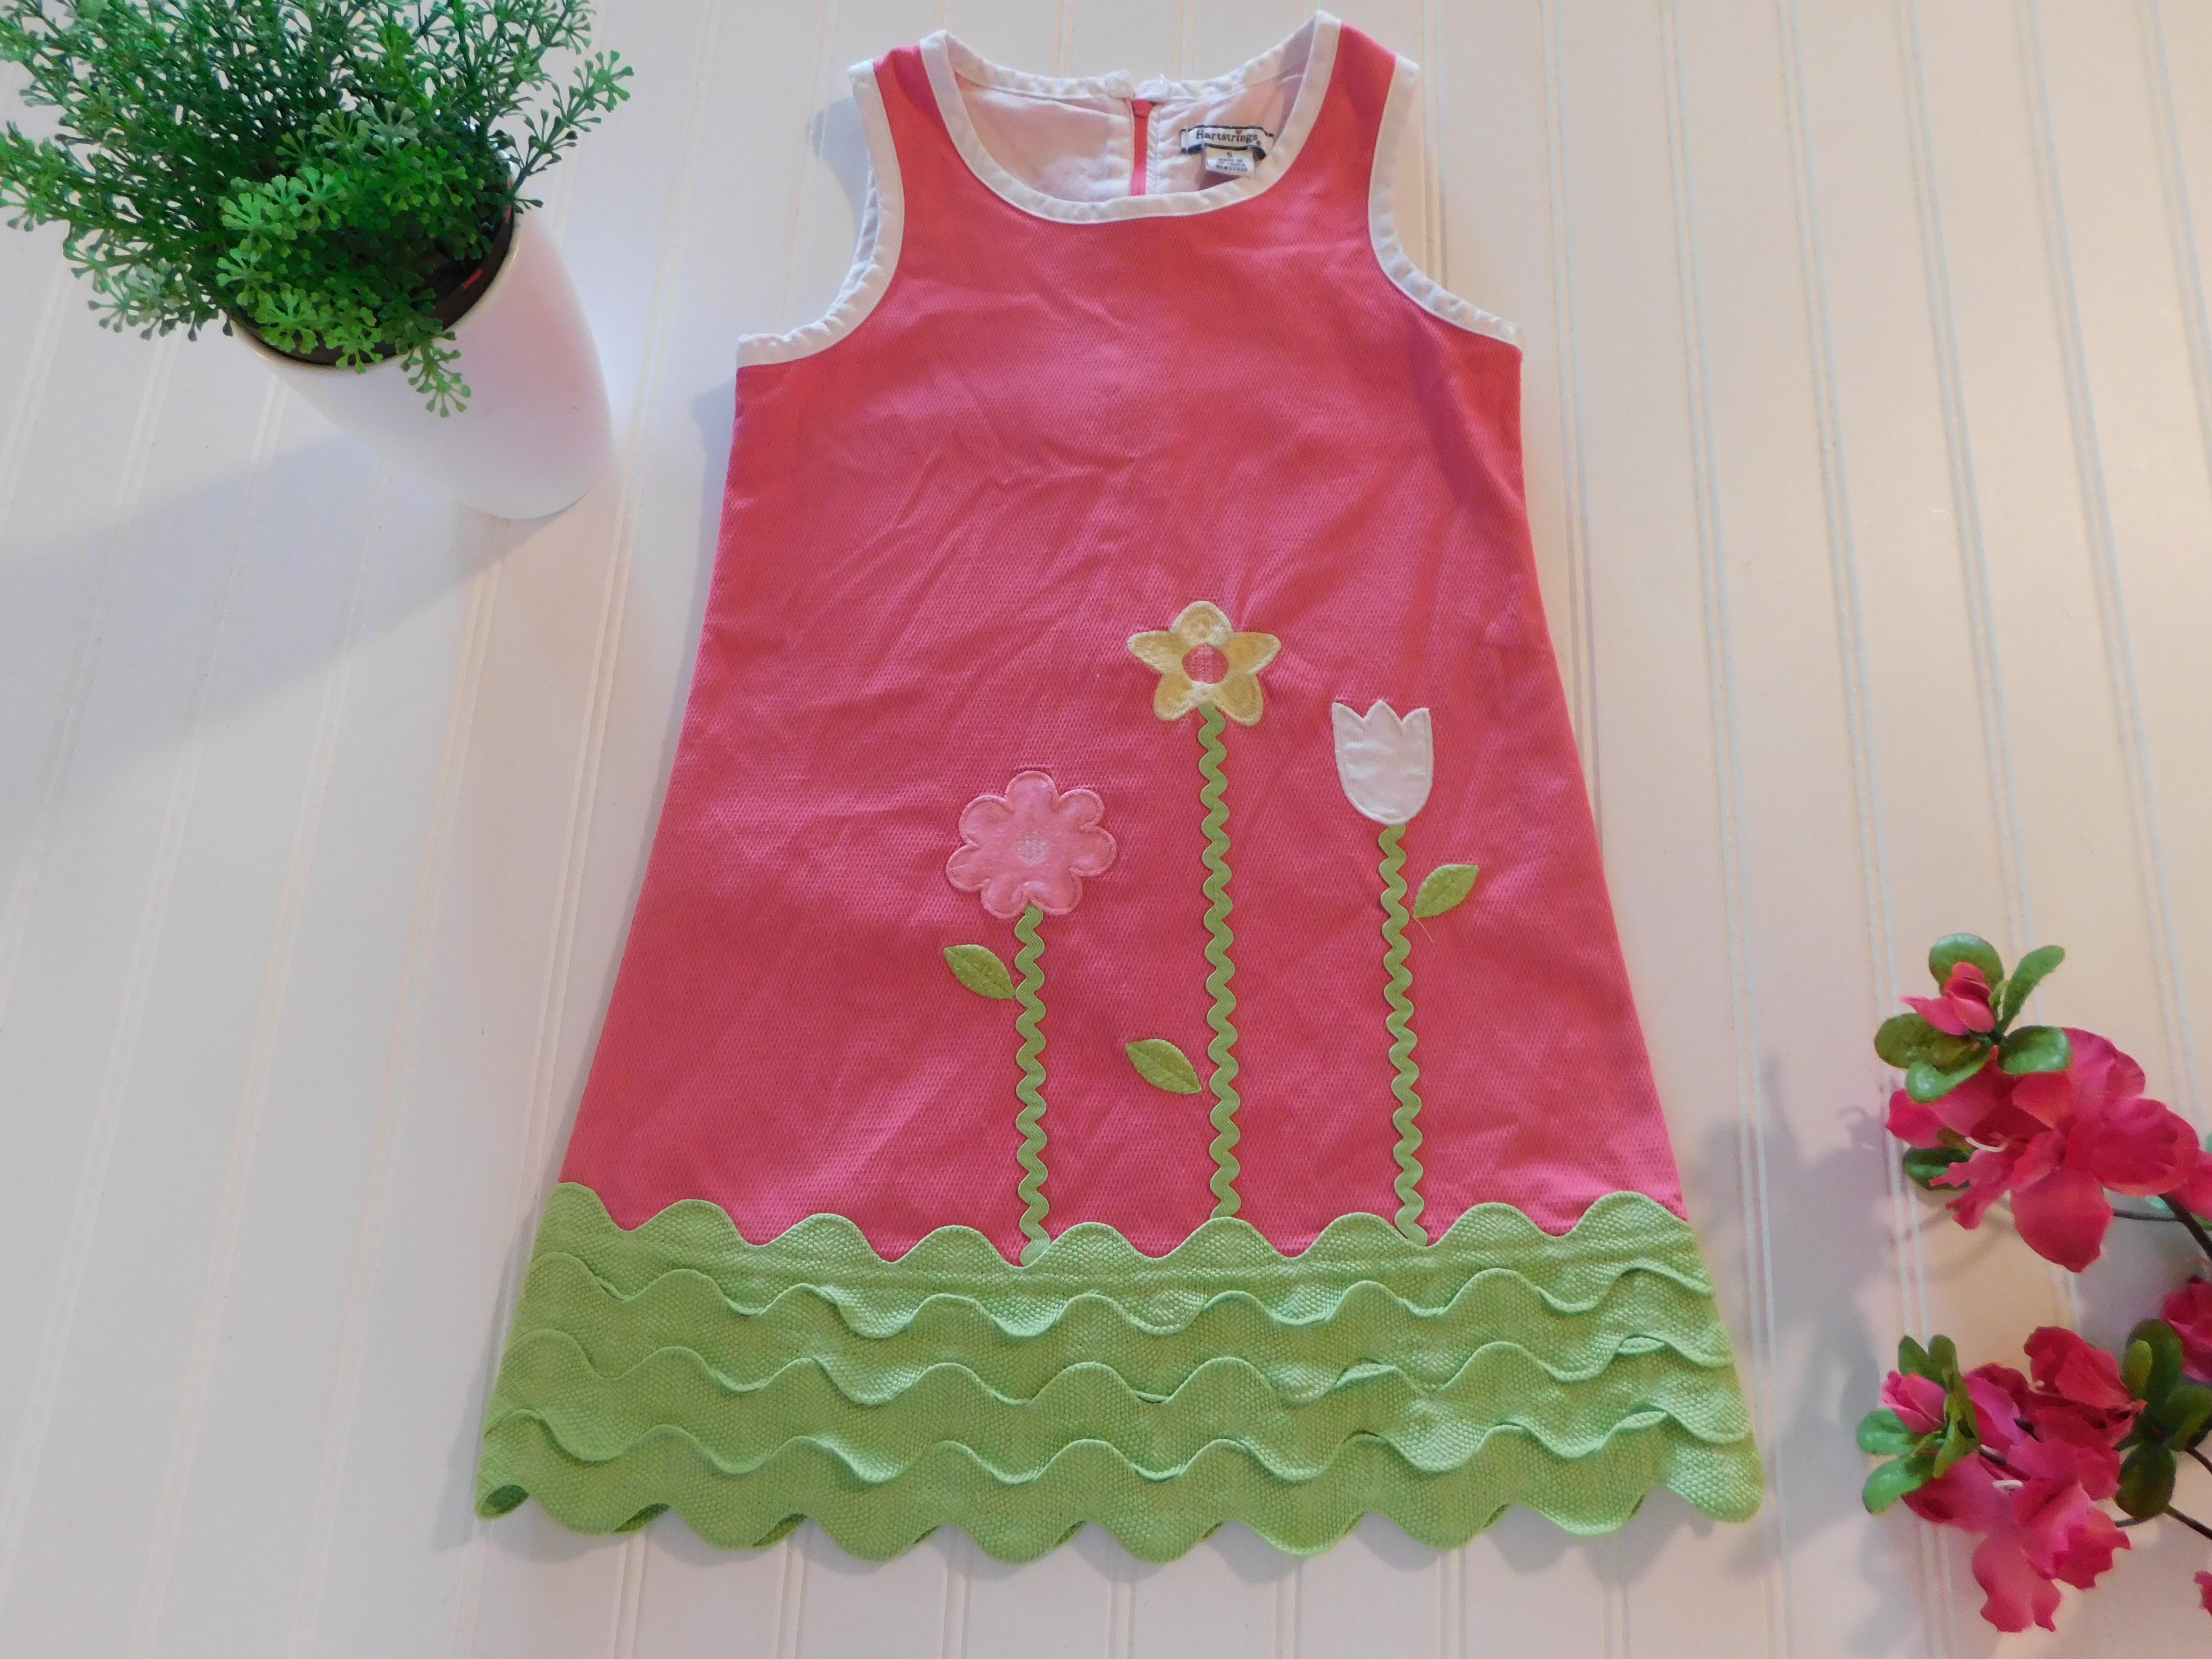 Hartstrings Girl size 5 Pink Textured Spring Flower Embroidered Easter Shift Dress